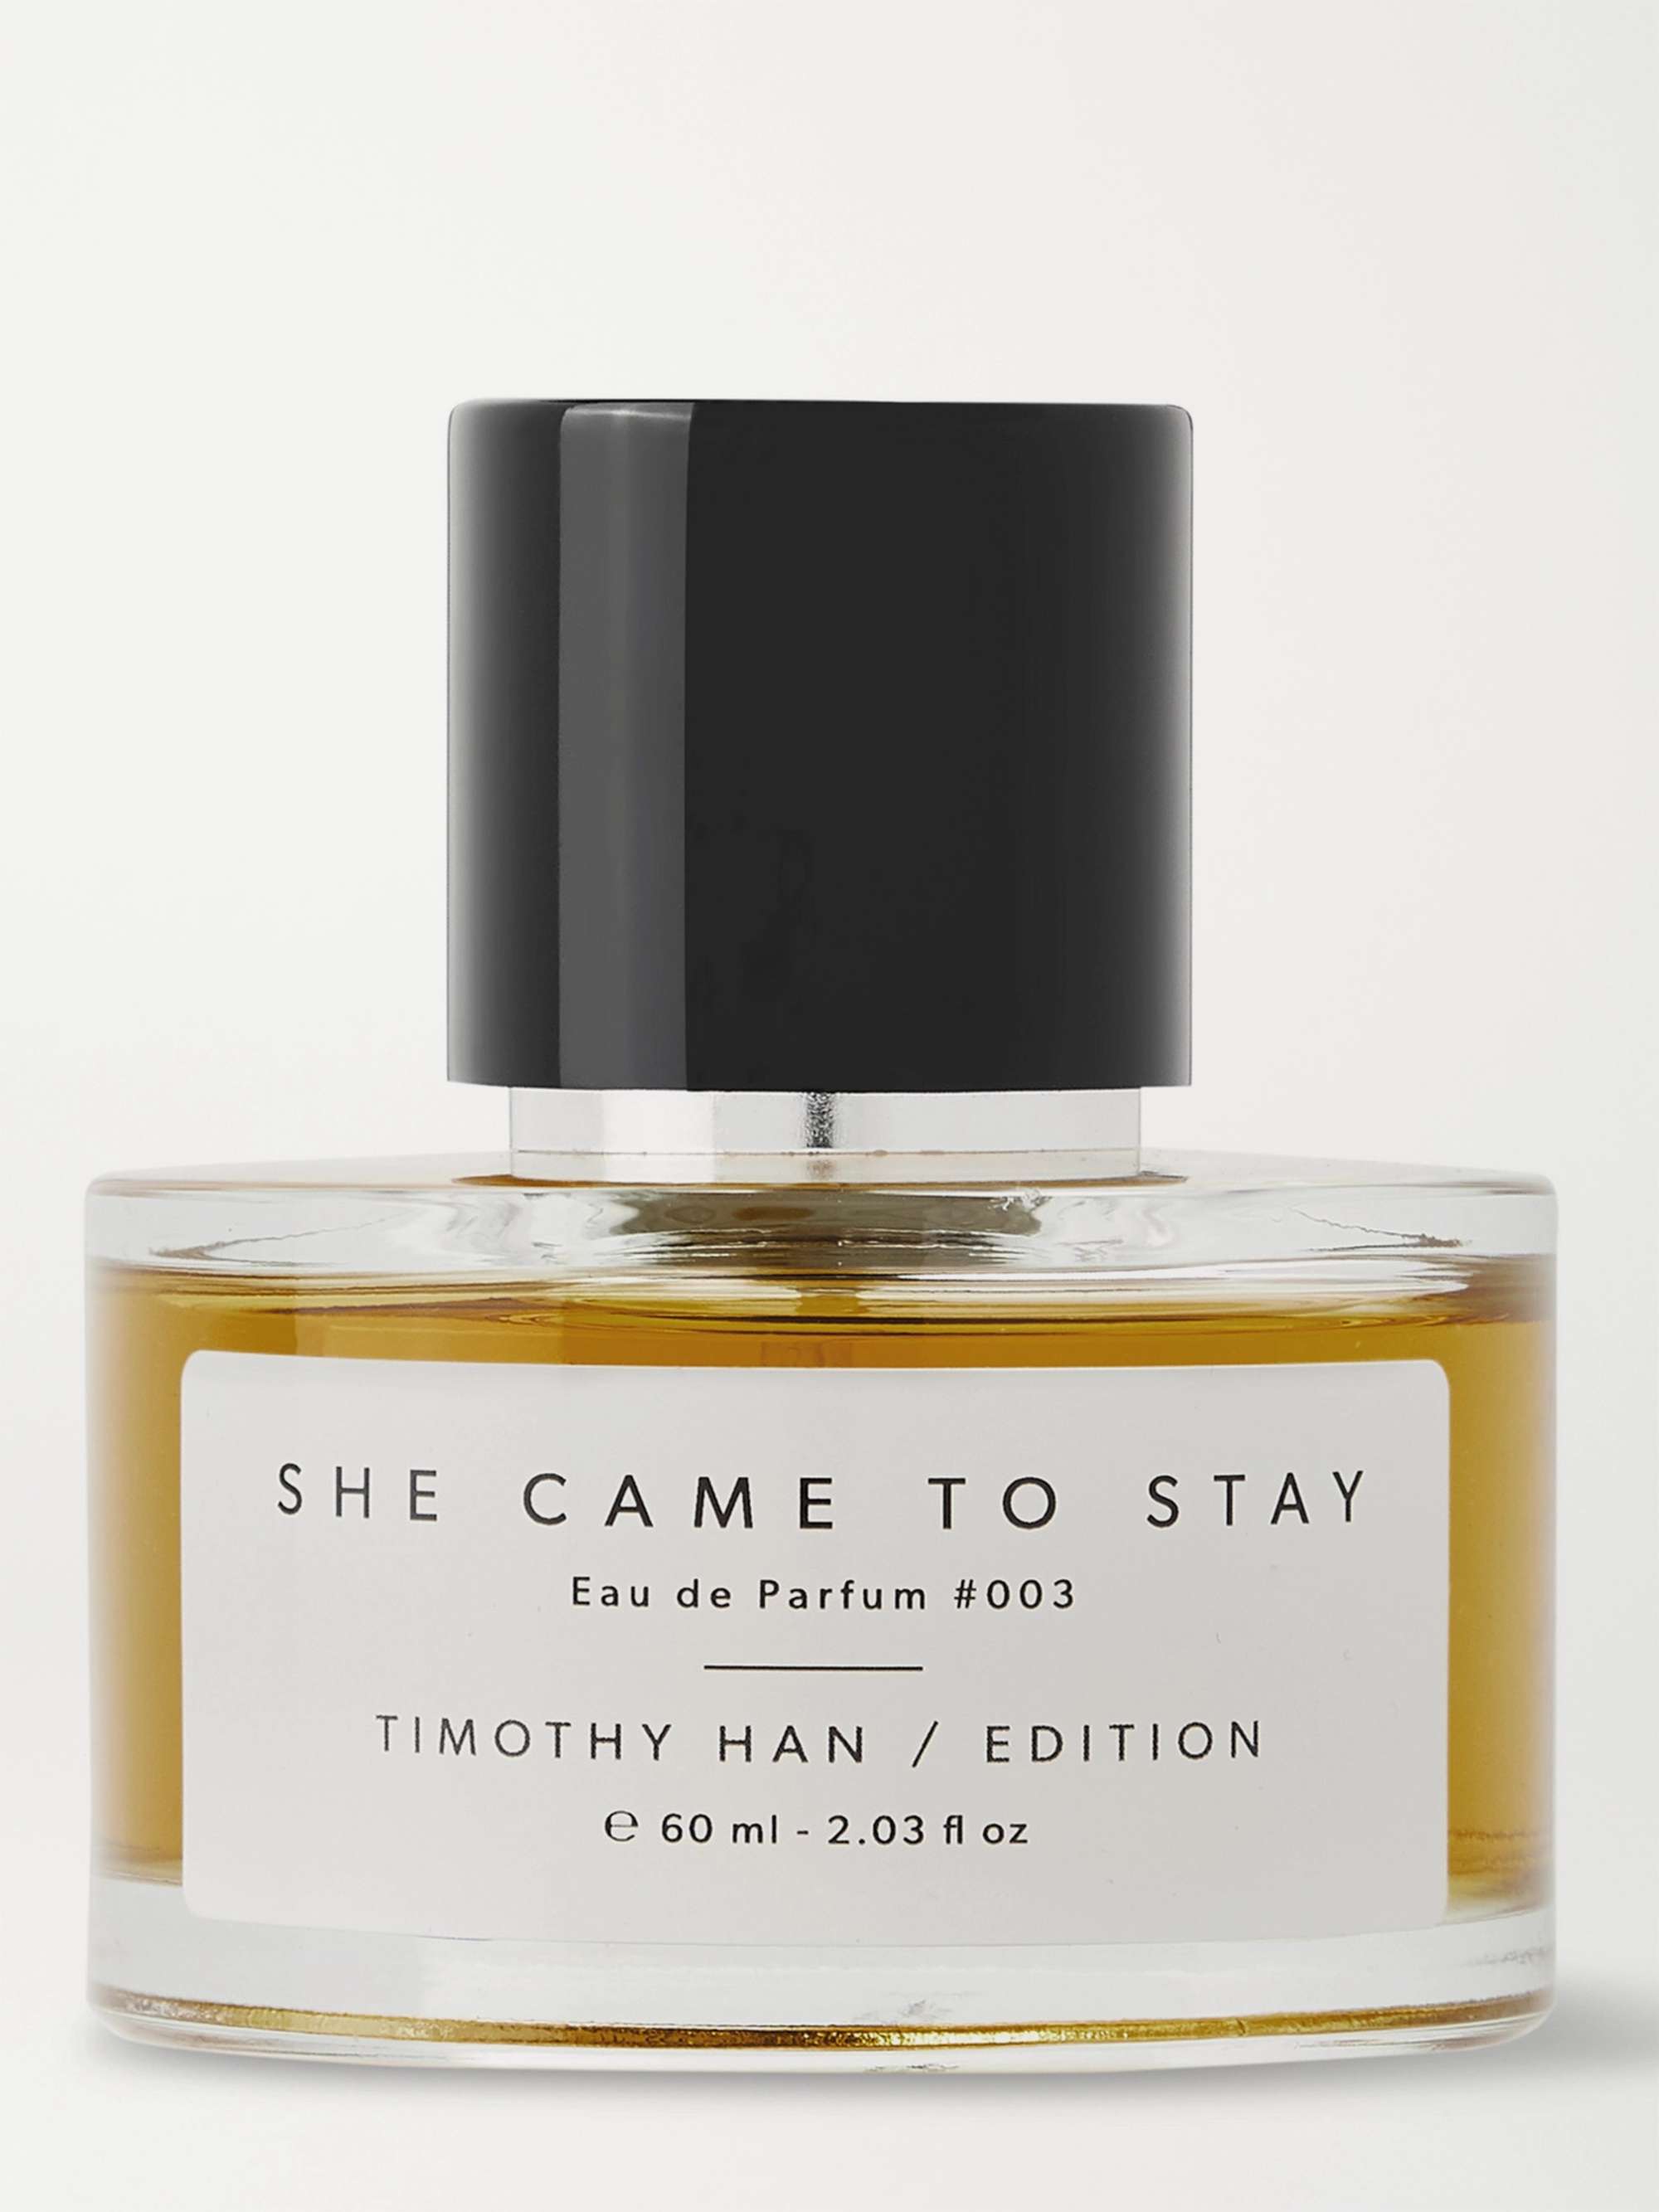 TIMOTHY HAN / EDITION She Came to Stay Eau de Parfum, 60ml